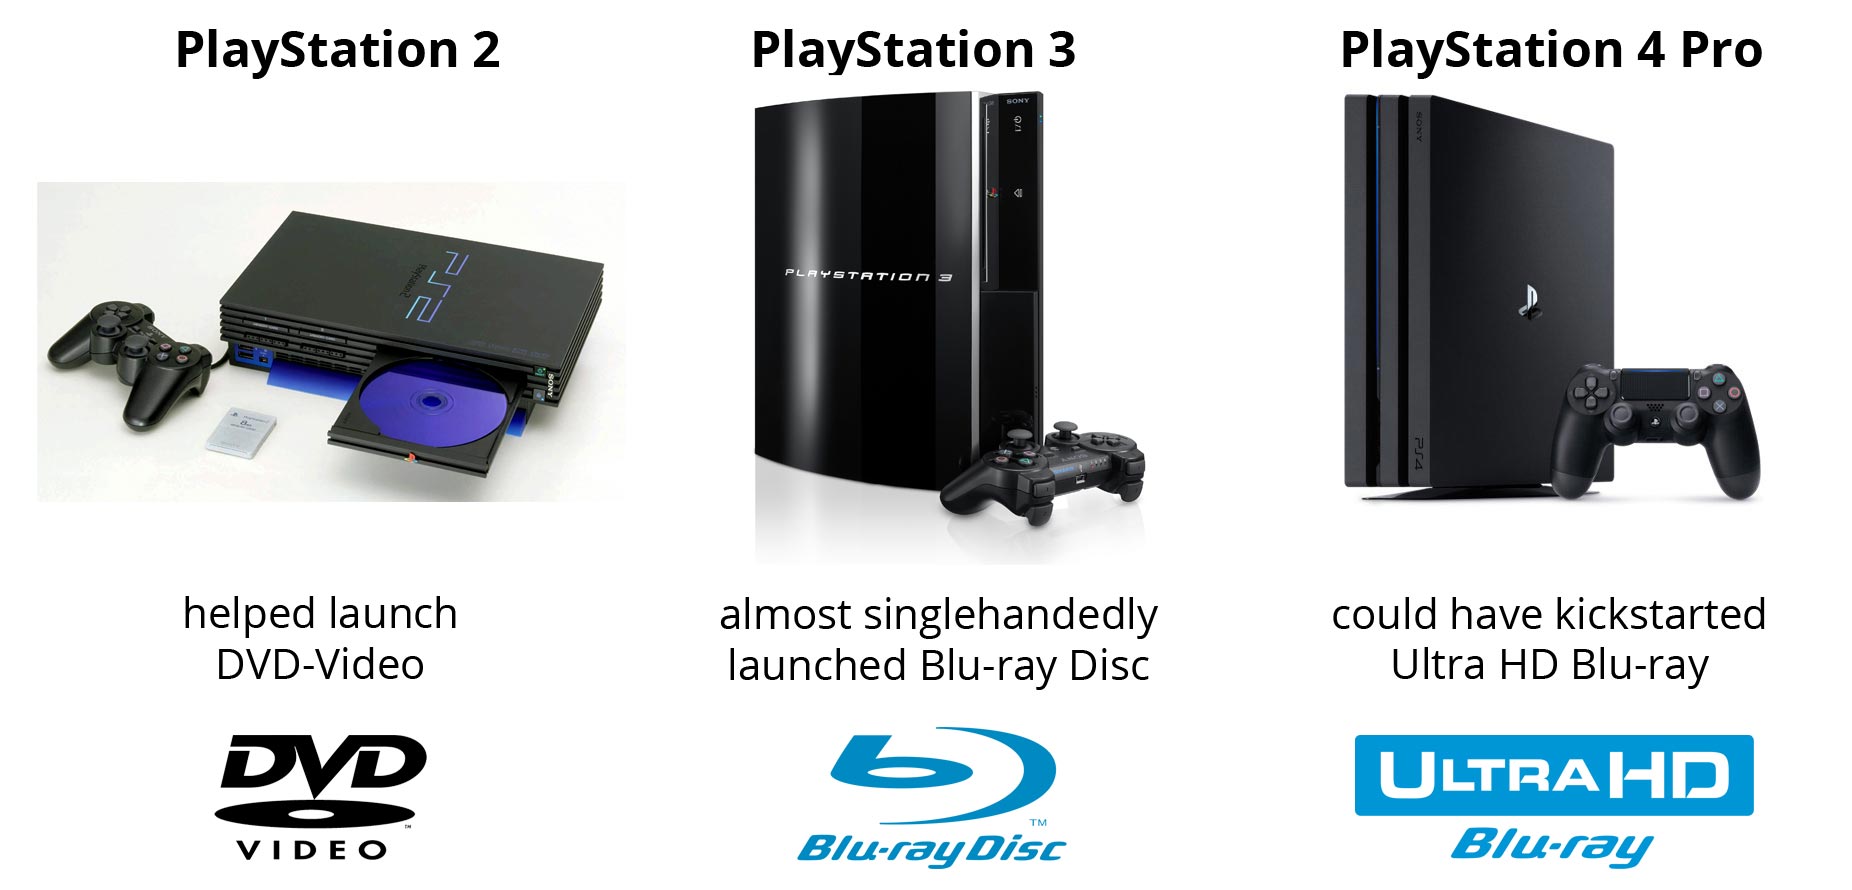 undskylde Kilauea Mountain ært 5 reasons why the PS4 Pro should have an Ultra HD Blu-ray drive -  FlatpanelsHD